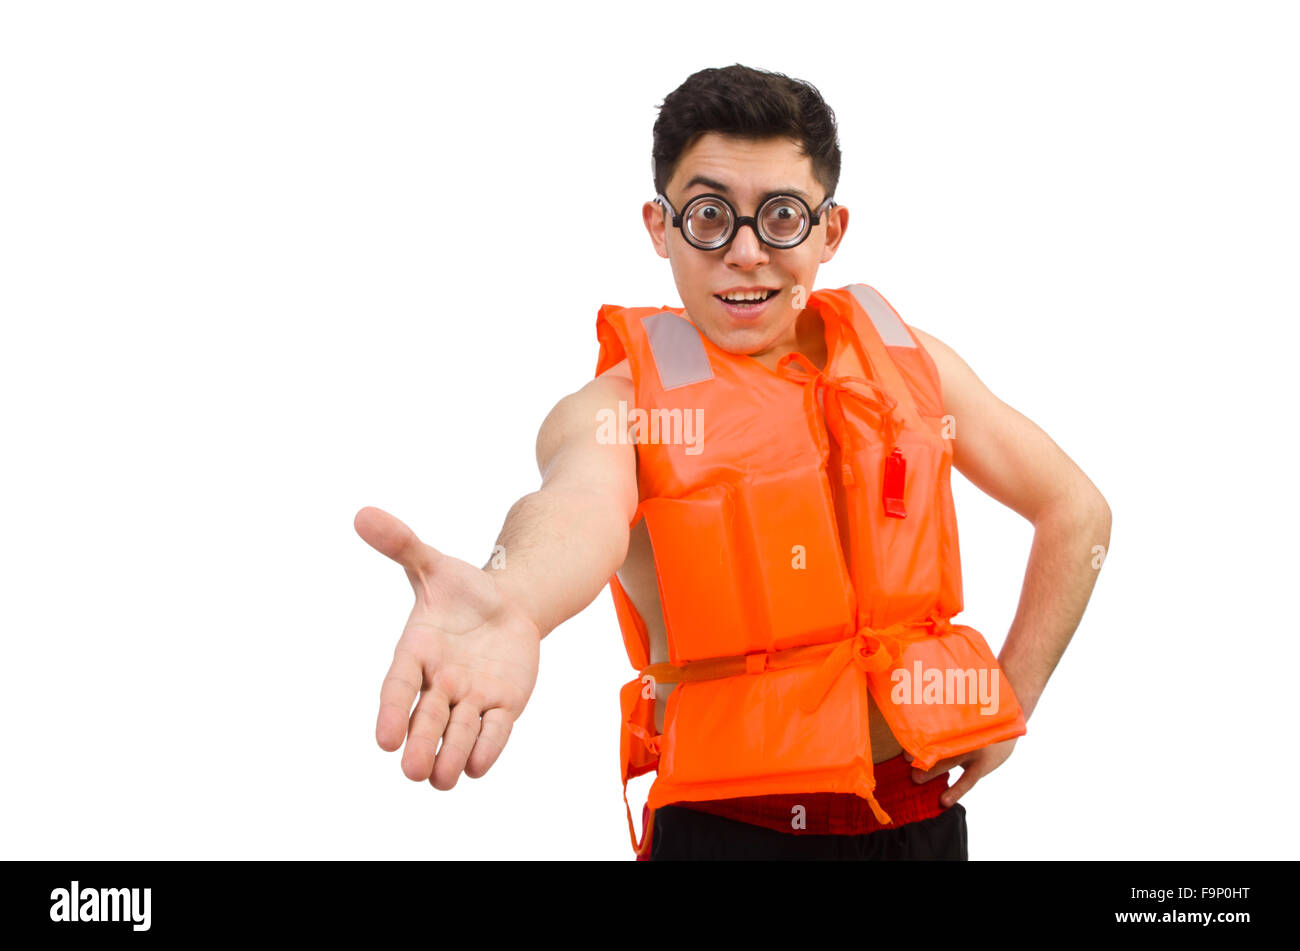 Funny man wearing orange safety vest Stock Photo - Alamy